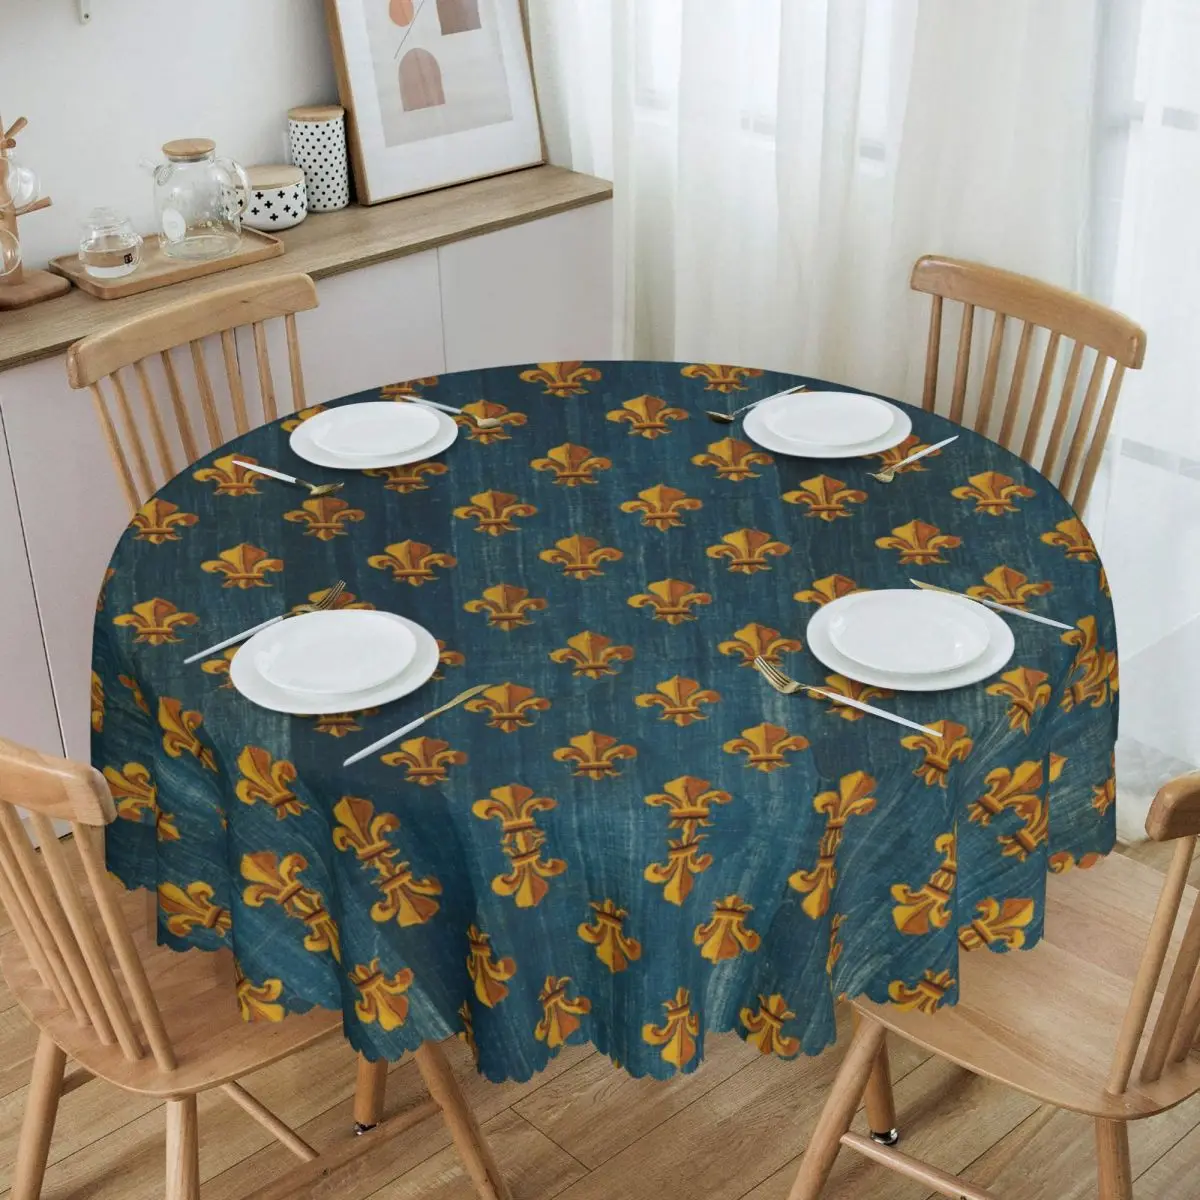 

Gold Fleur De Lys Tablecloth Round Waterproof Lily Flower Fleur-de-Lis Table Cloth Cover for Banquet 60 inches